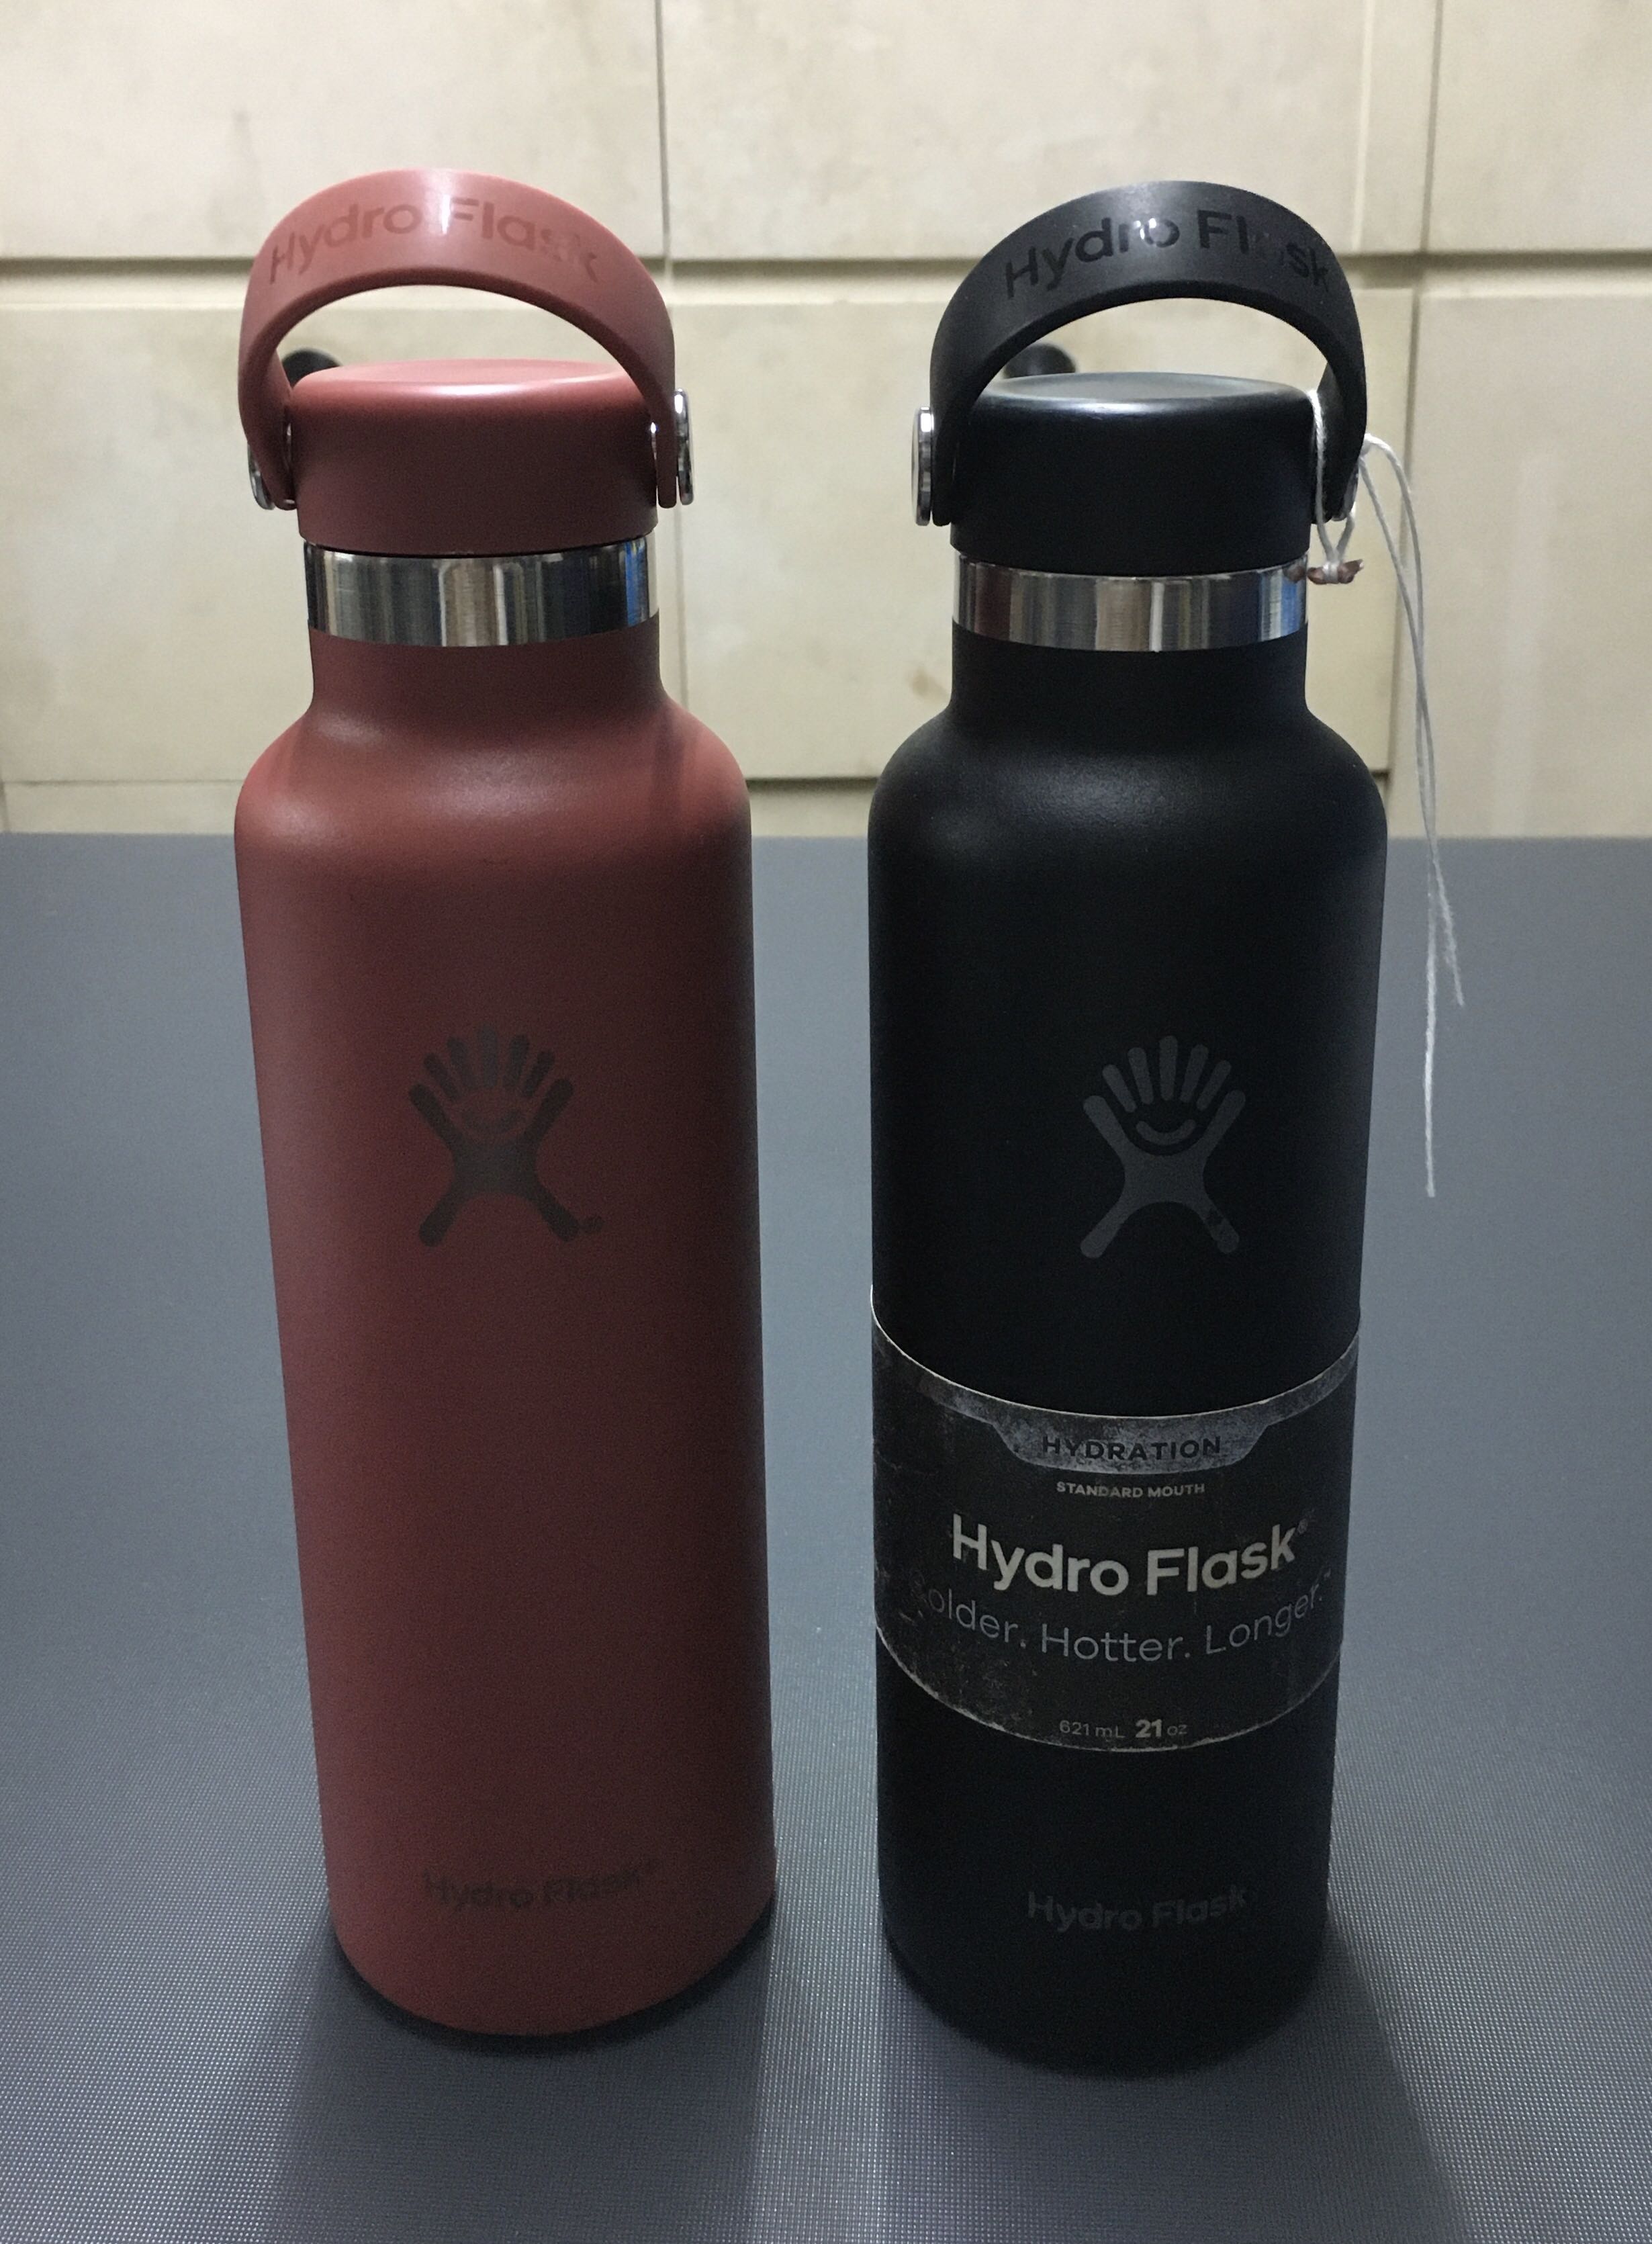 hydro flasks sold near me